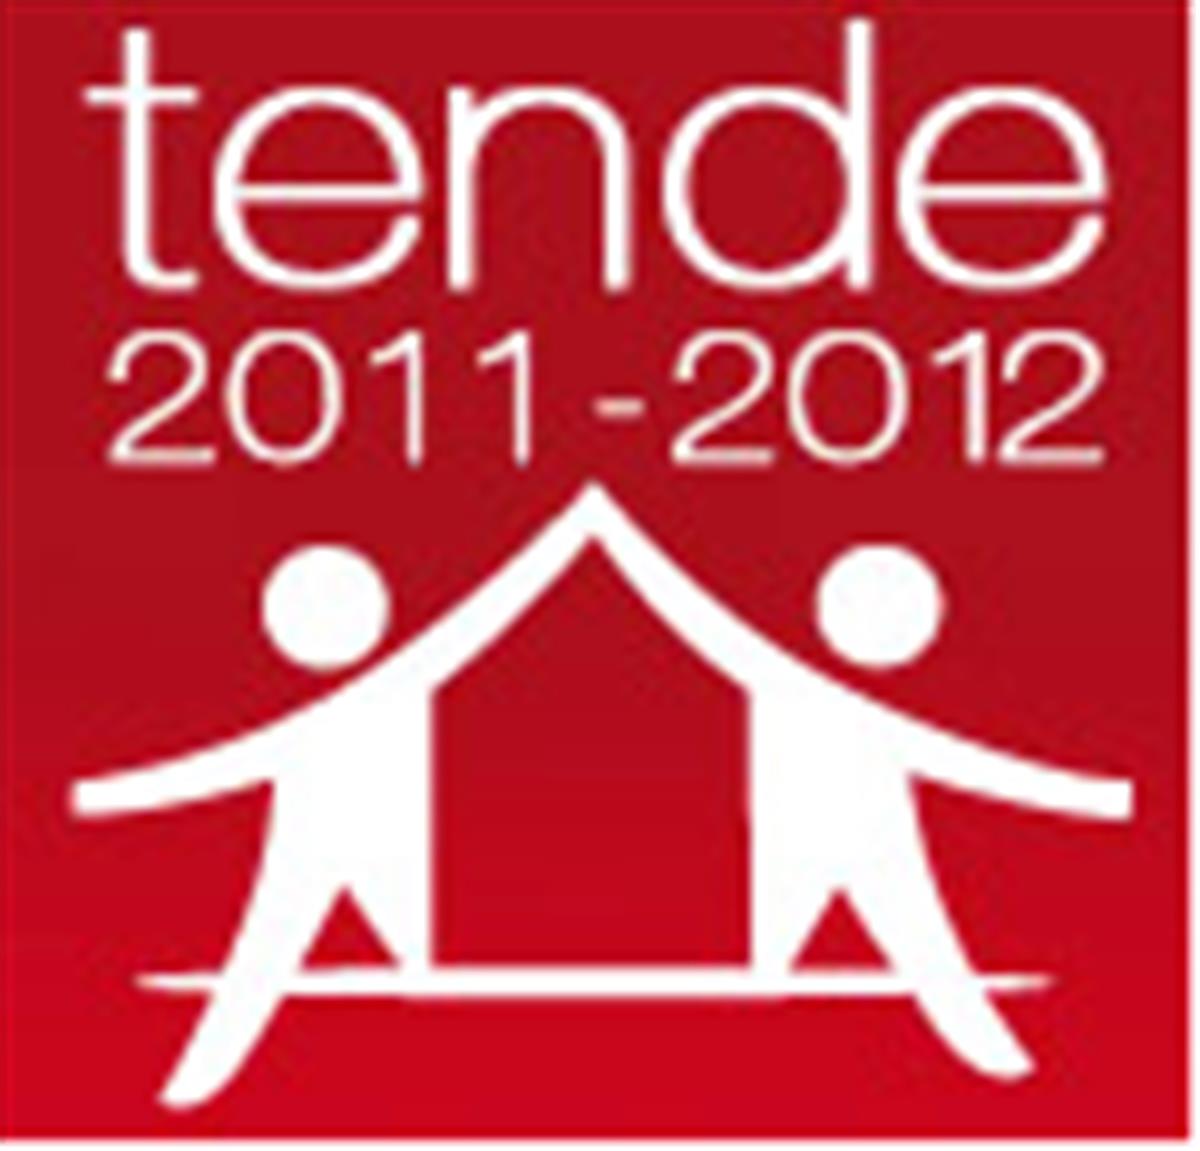 Special Tende 2011 12